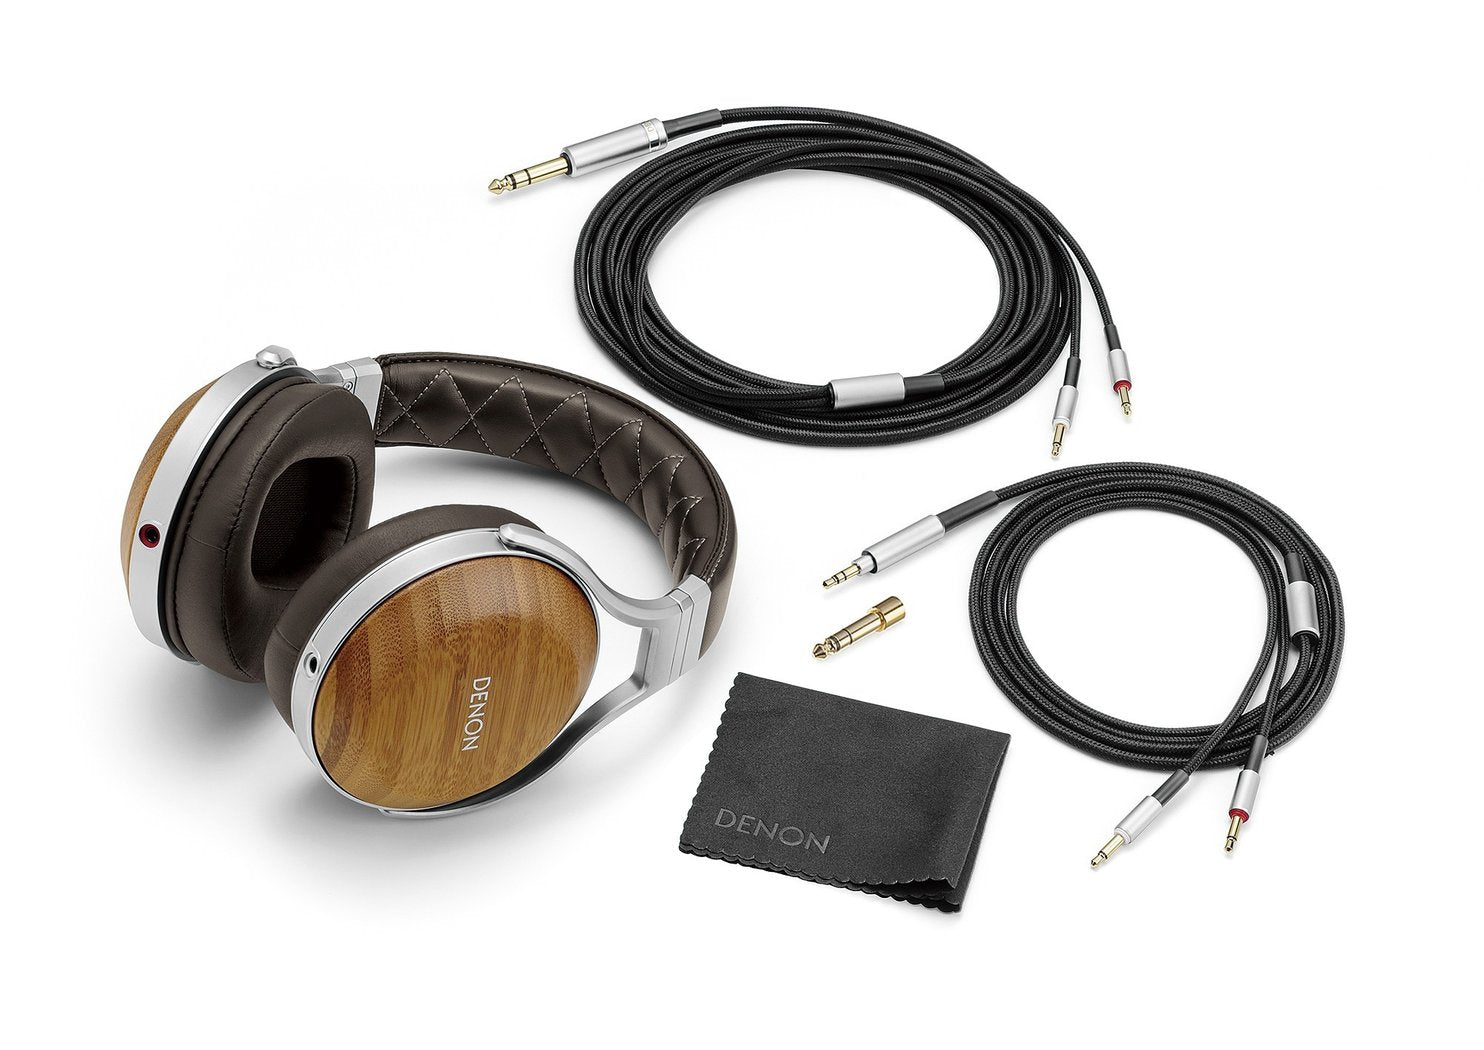 Denon AH-D9200 headband headphones